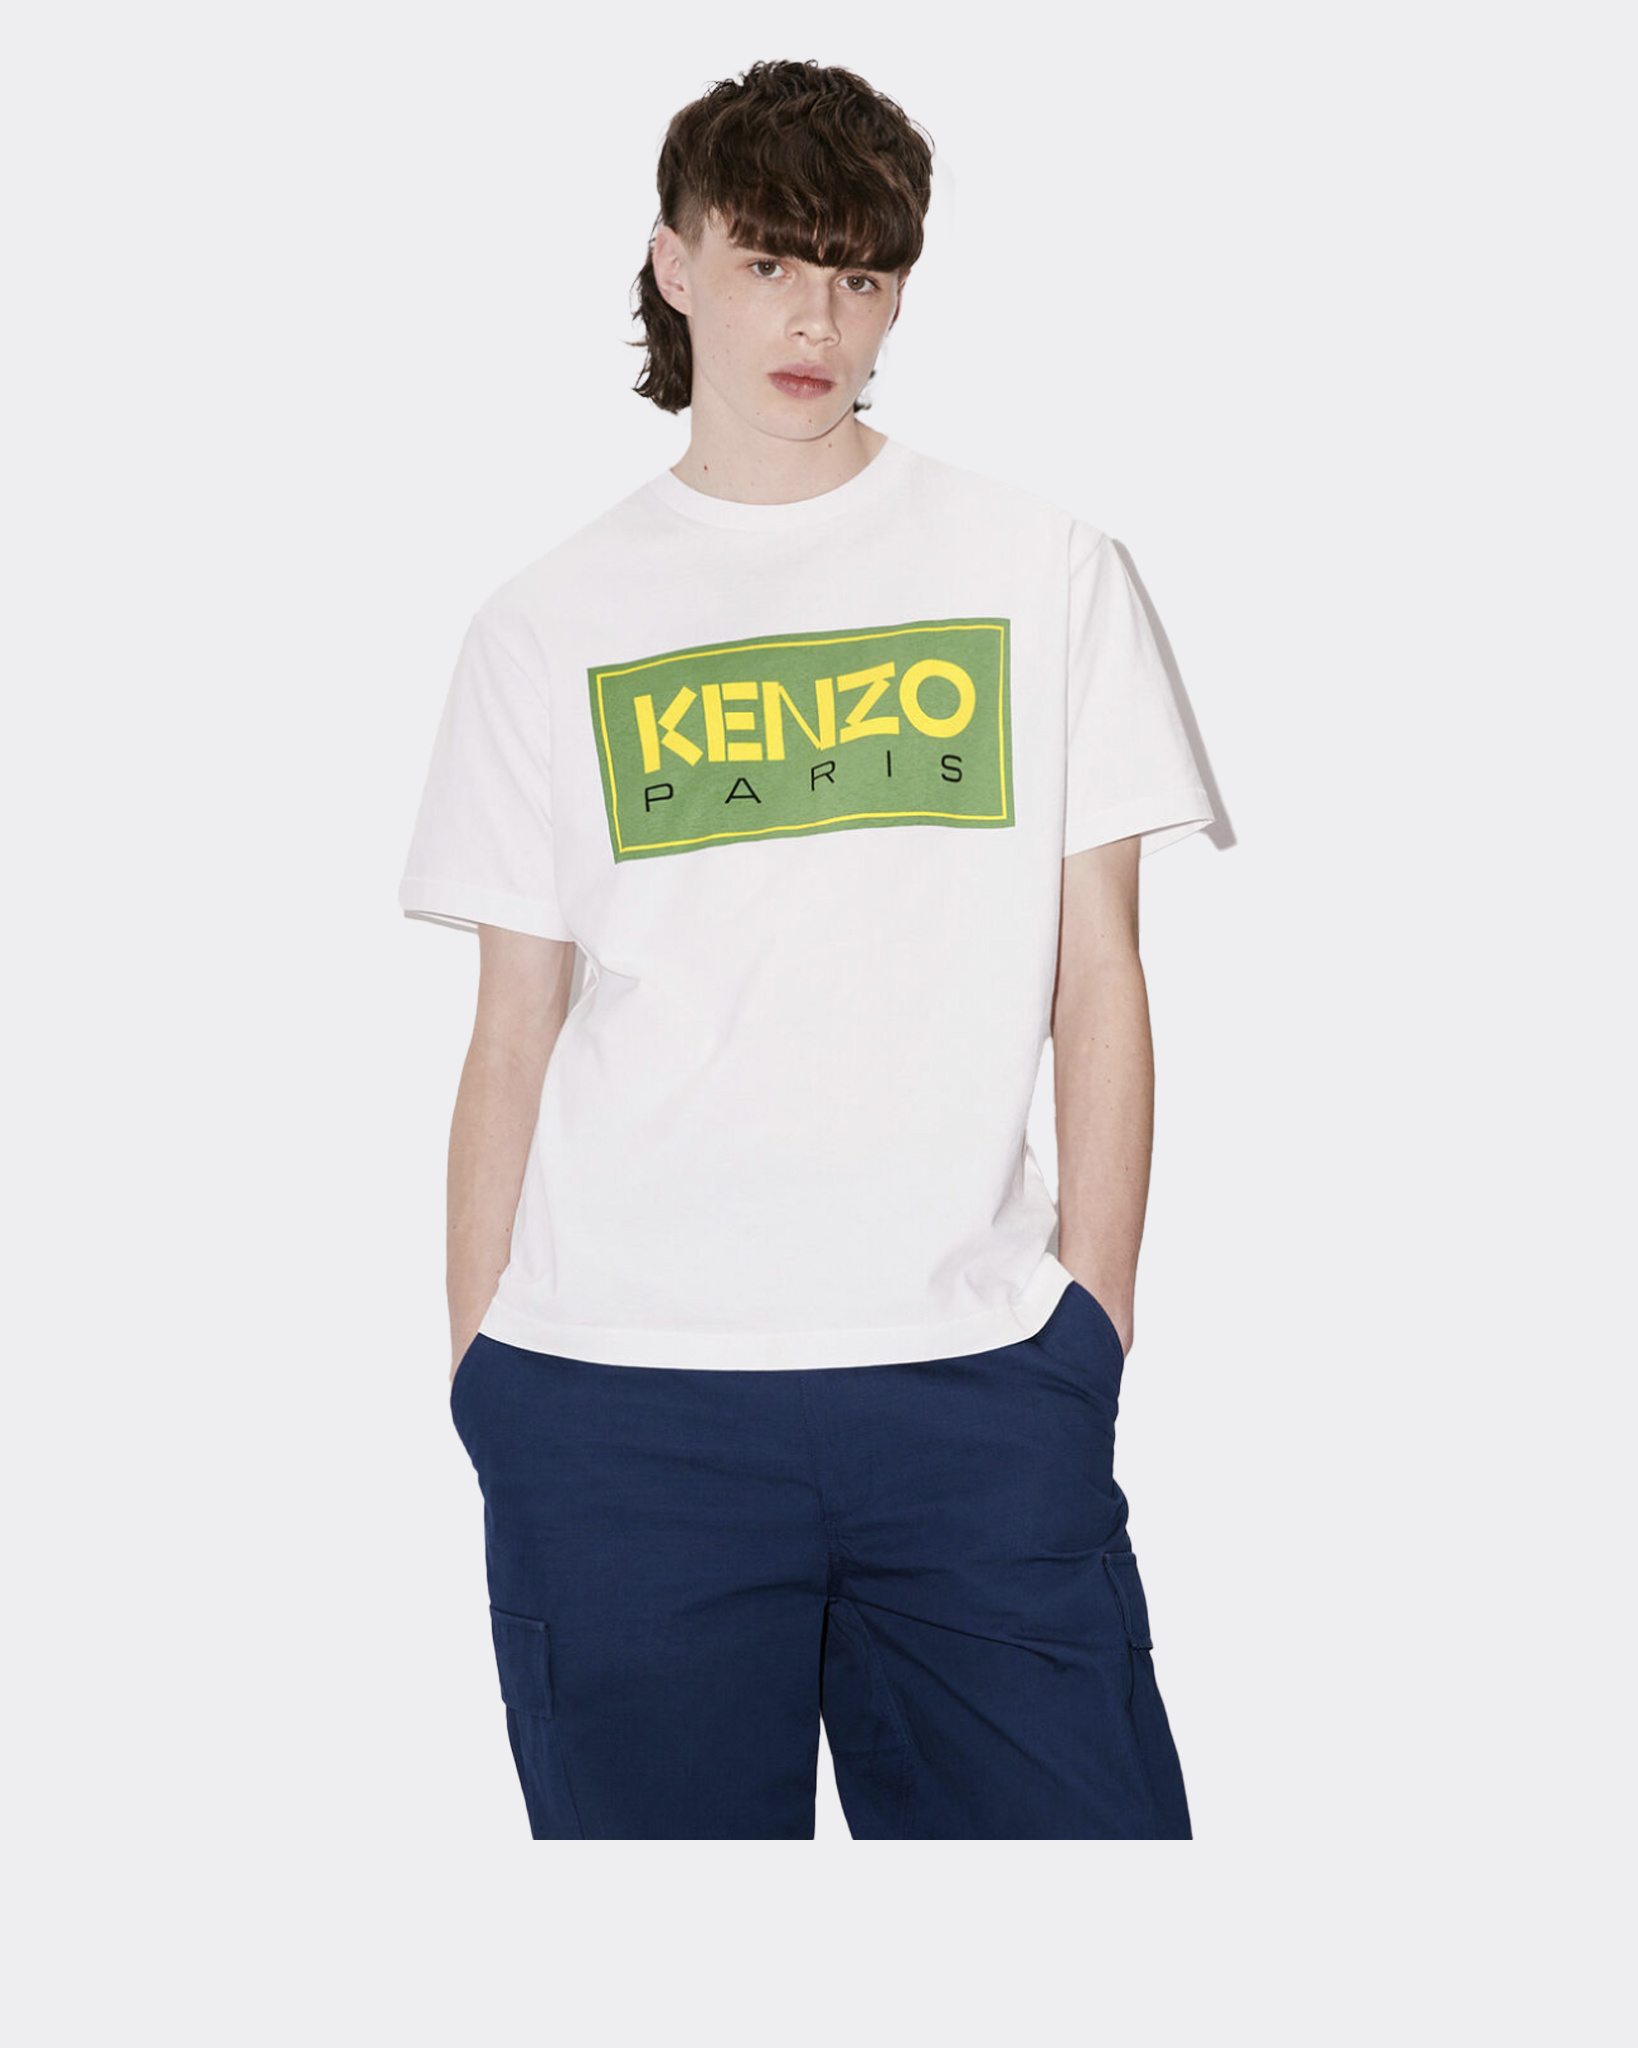 Kenzo by Nigo Pixel Classic T-shirt White